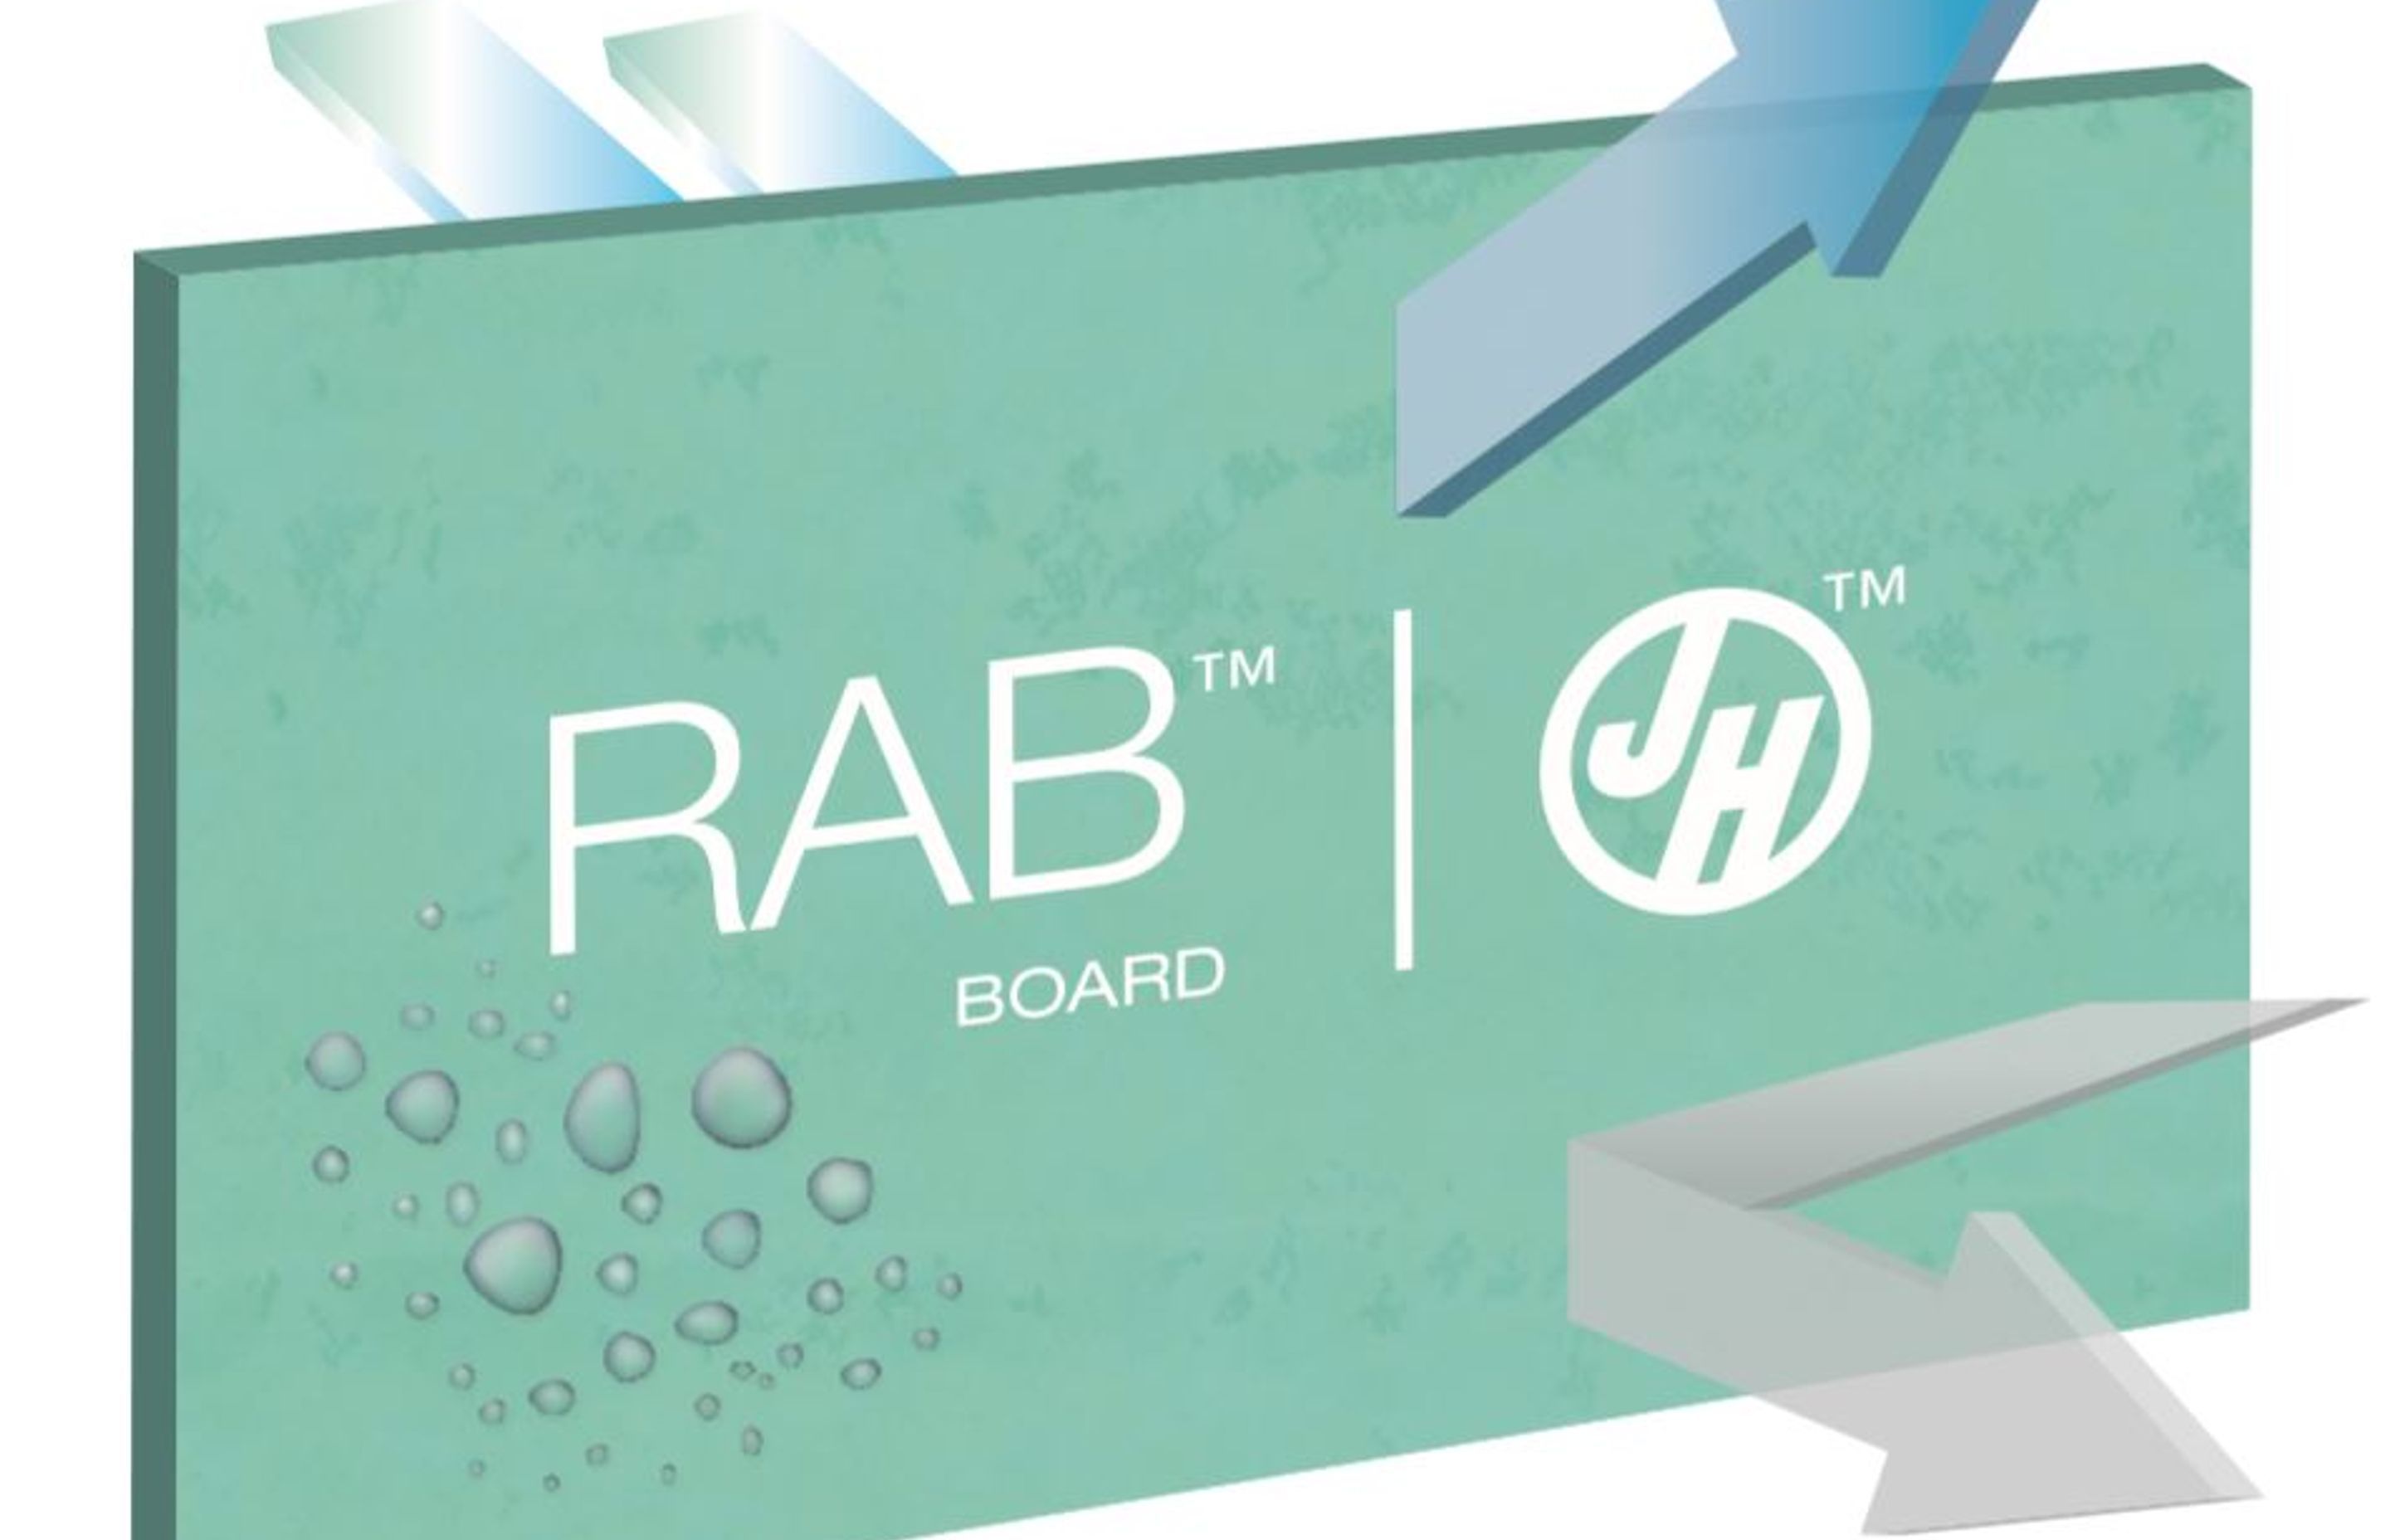 James Hardie'sRAB Board features a unique water-repellent sealer.